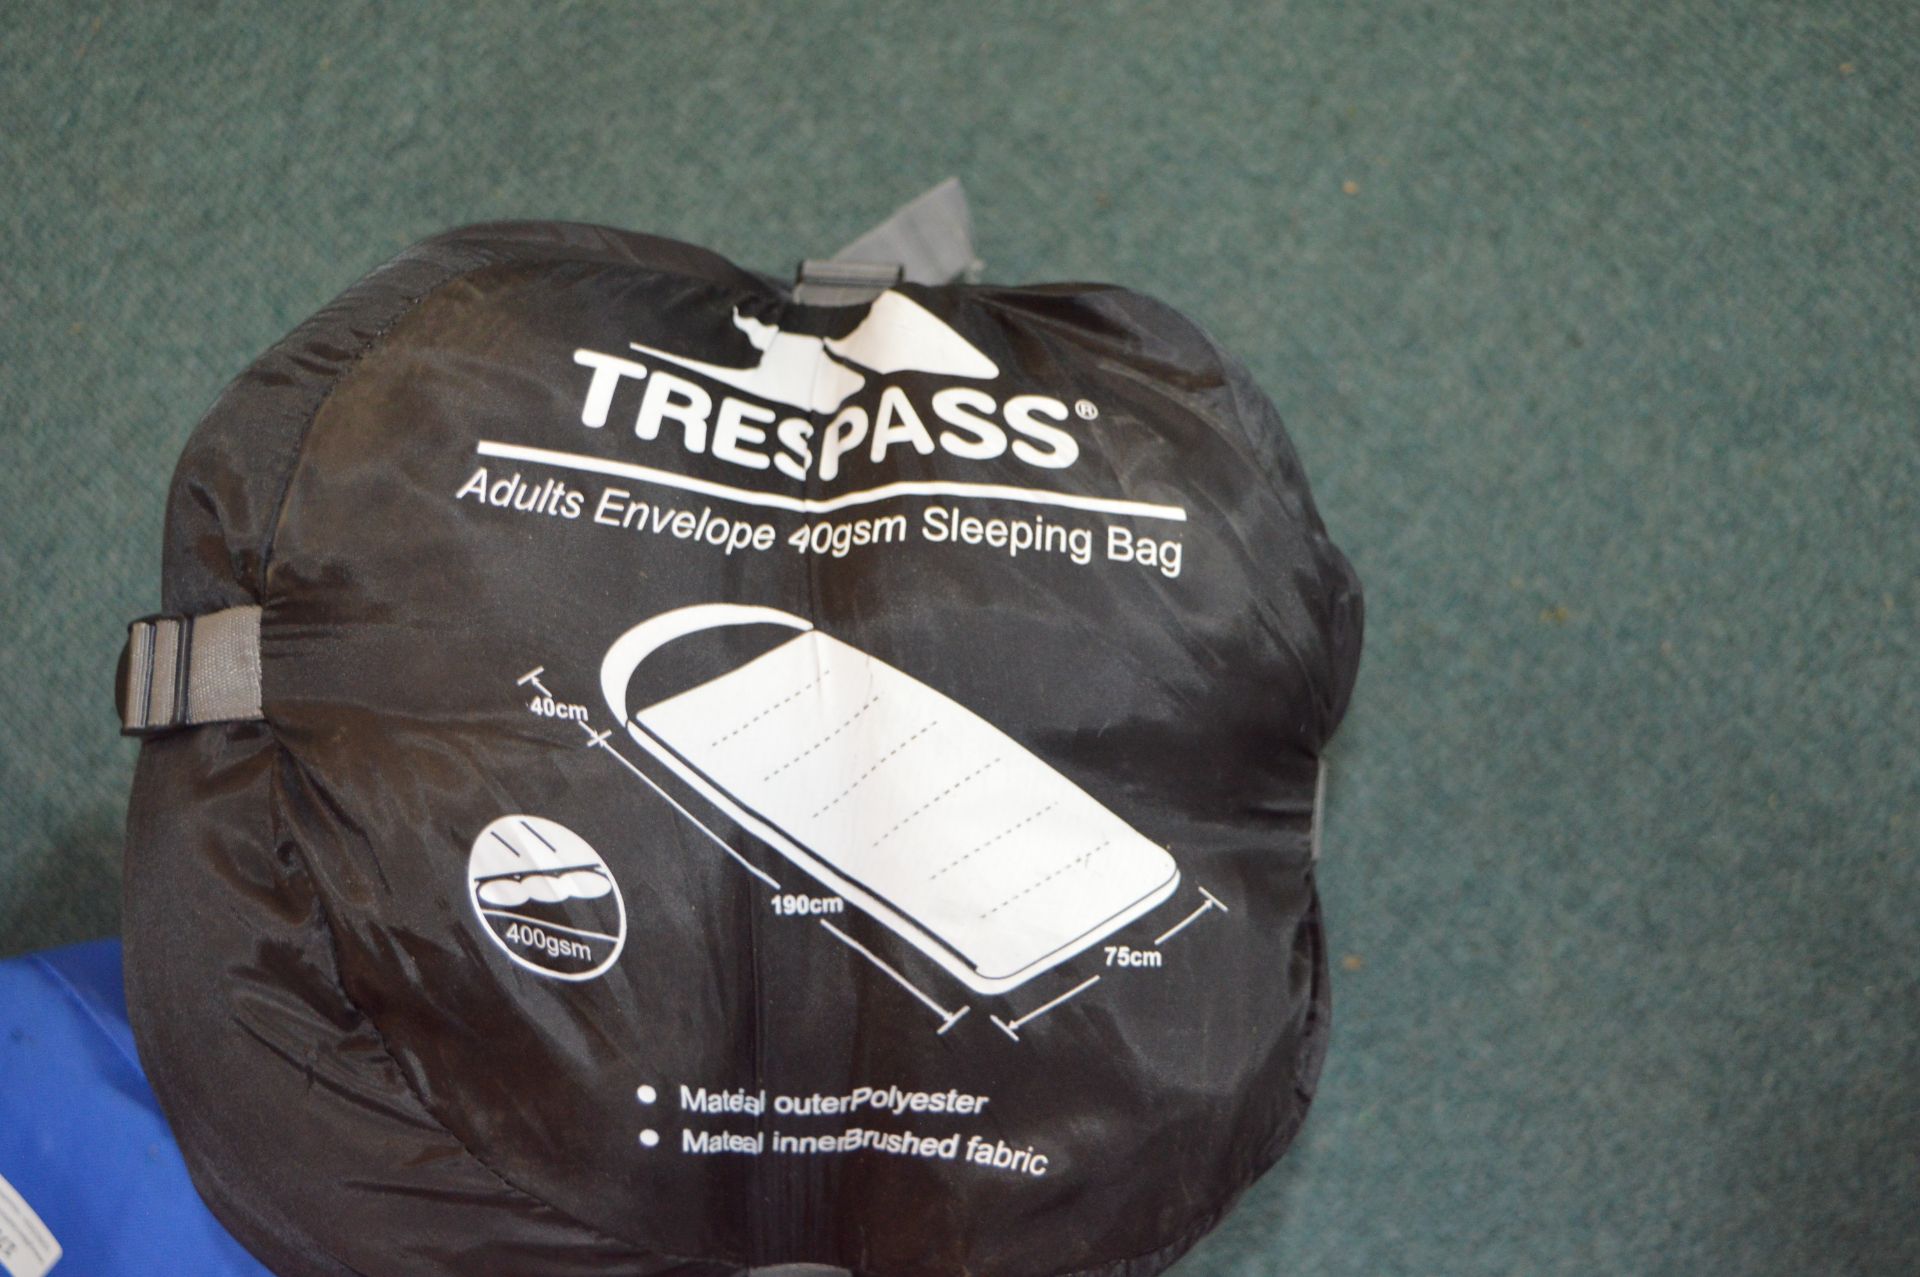 Trespass Envelope Sleeping Bag